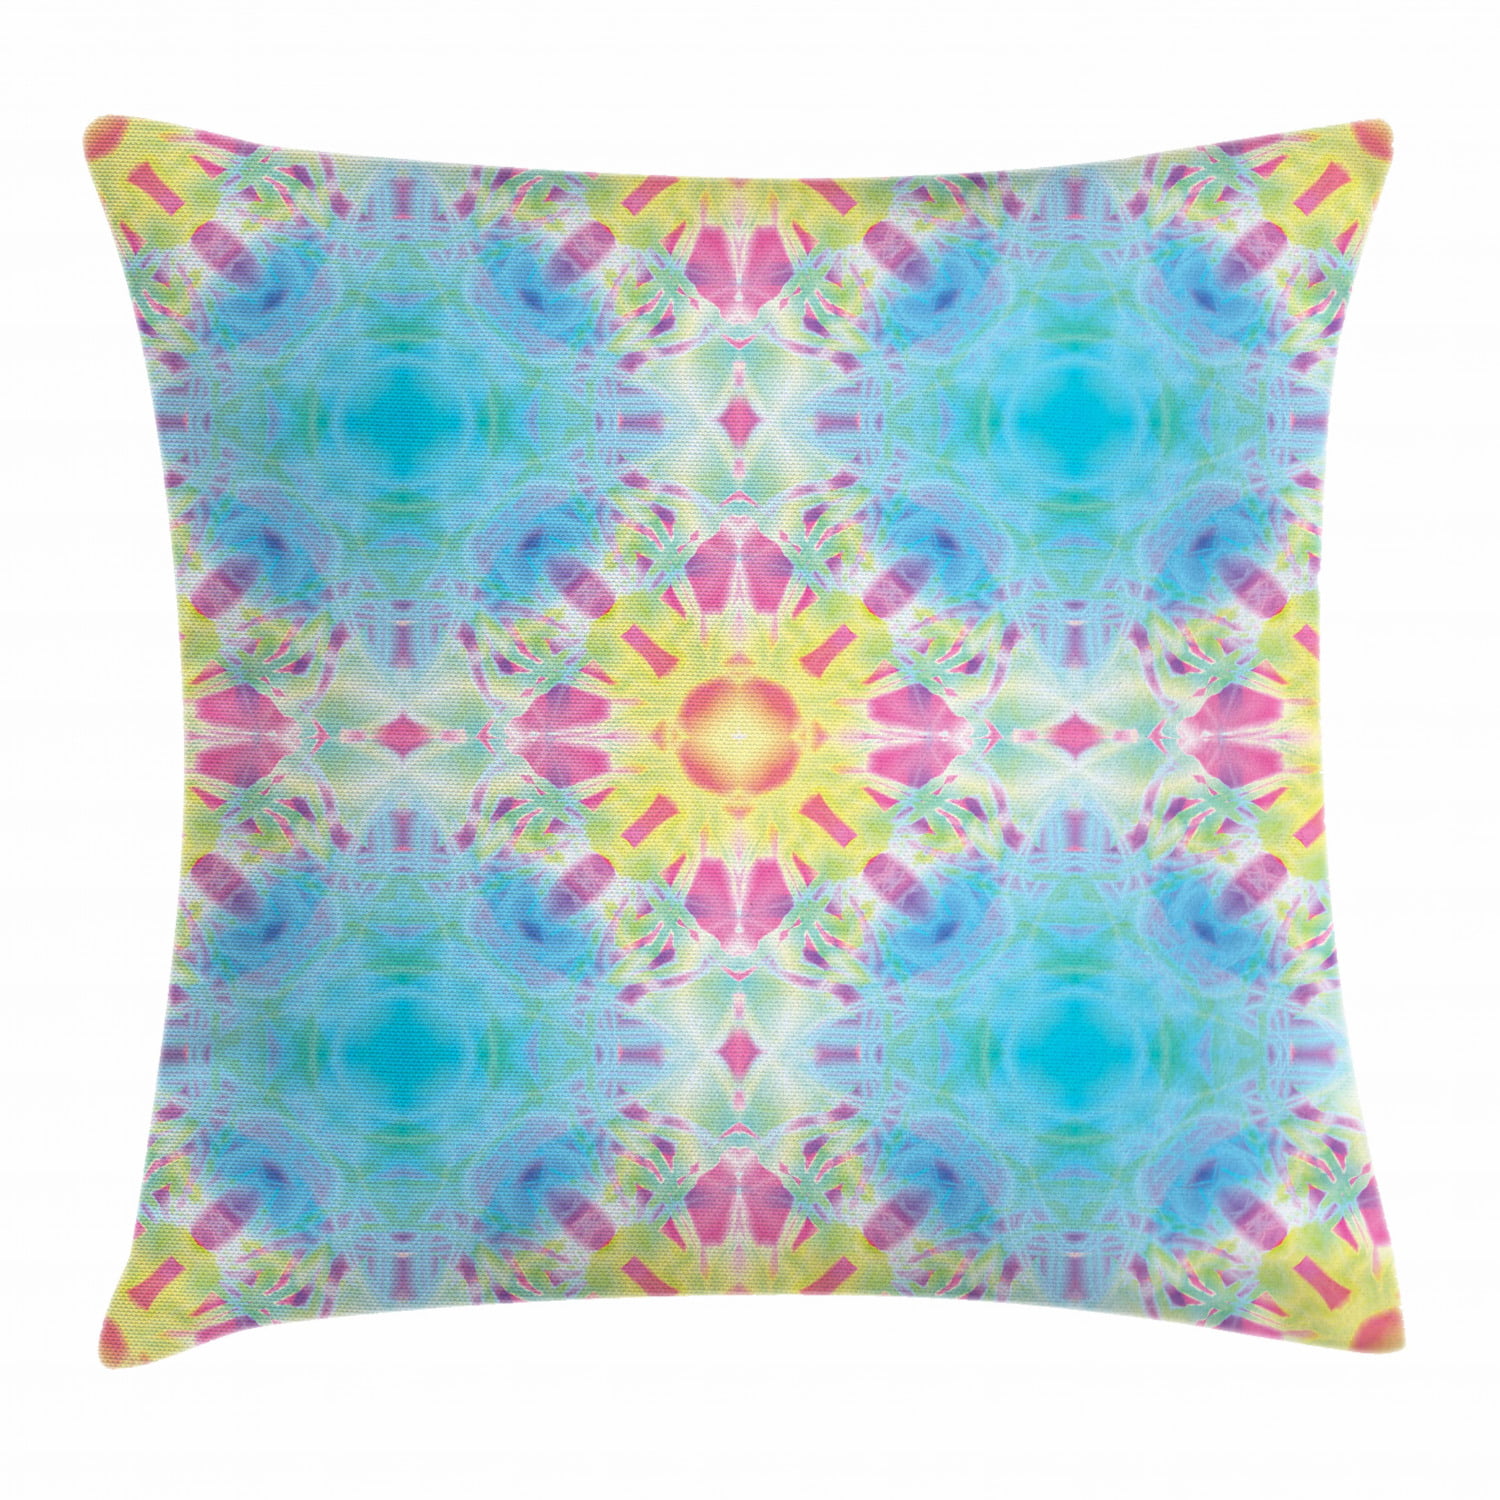 24" Small Elephant Mandala Floor Decorative Cushion Tie Dye Pillow Covers Throw